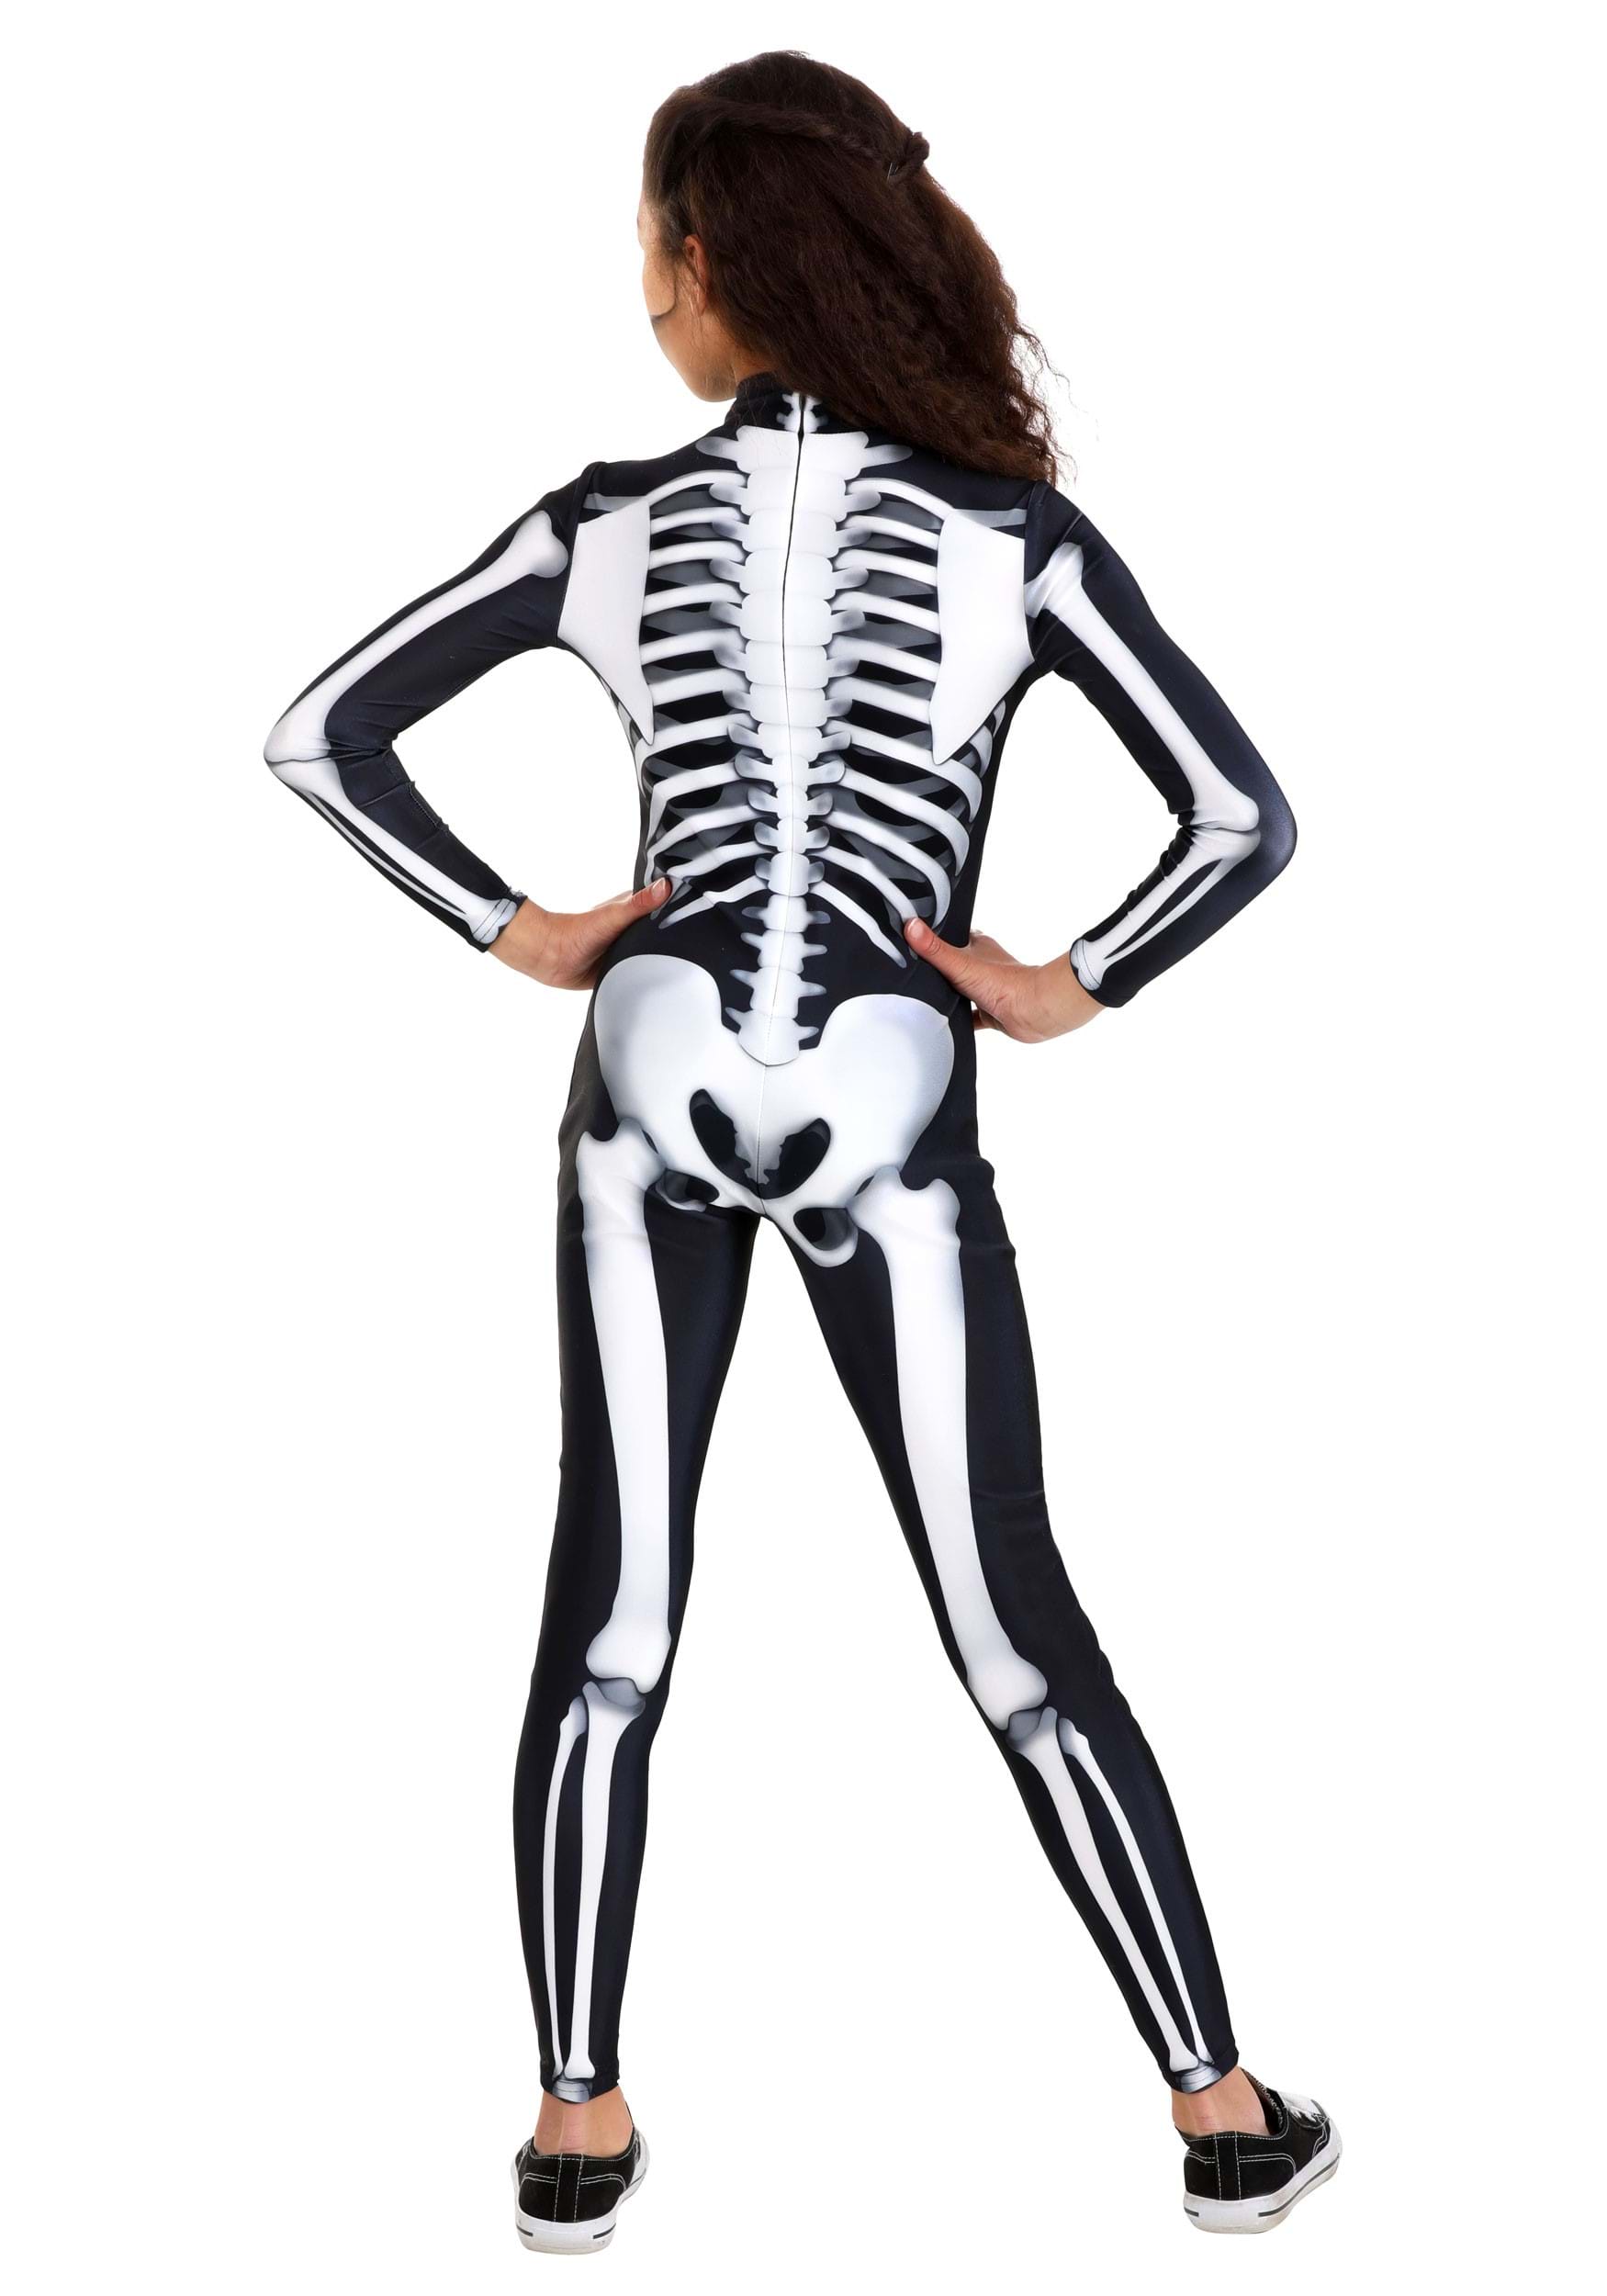 Jumpsuit Skeleton Costume For Girls